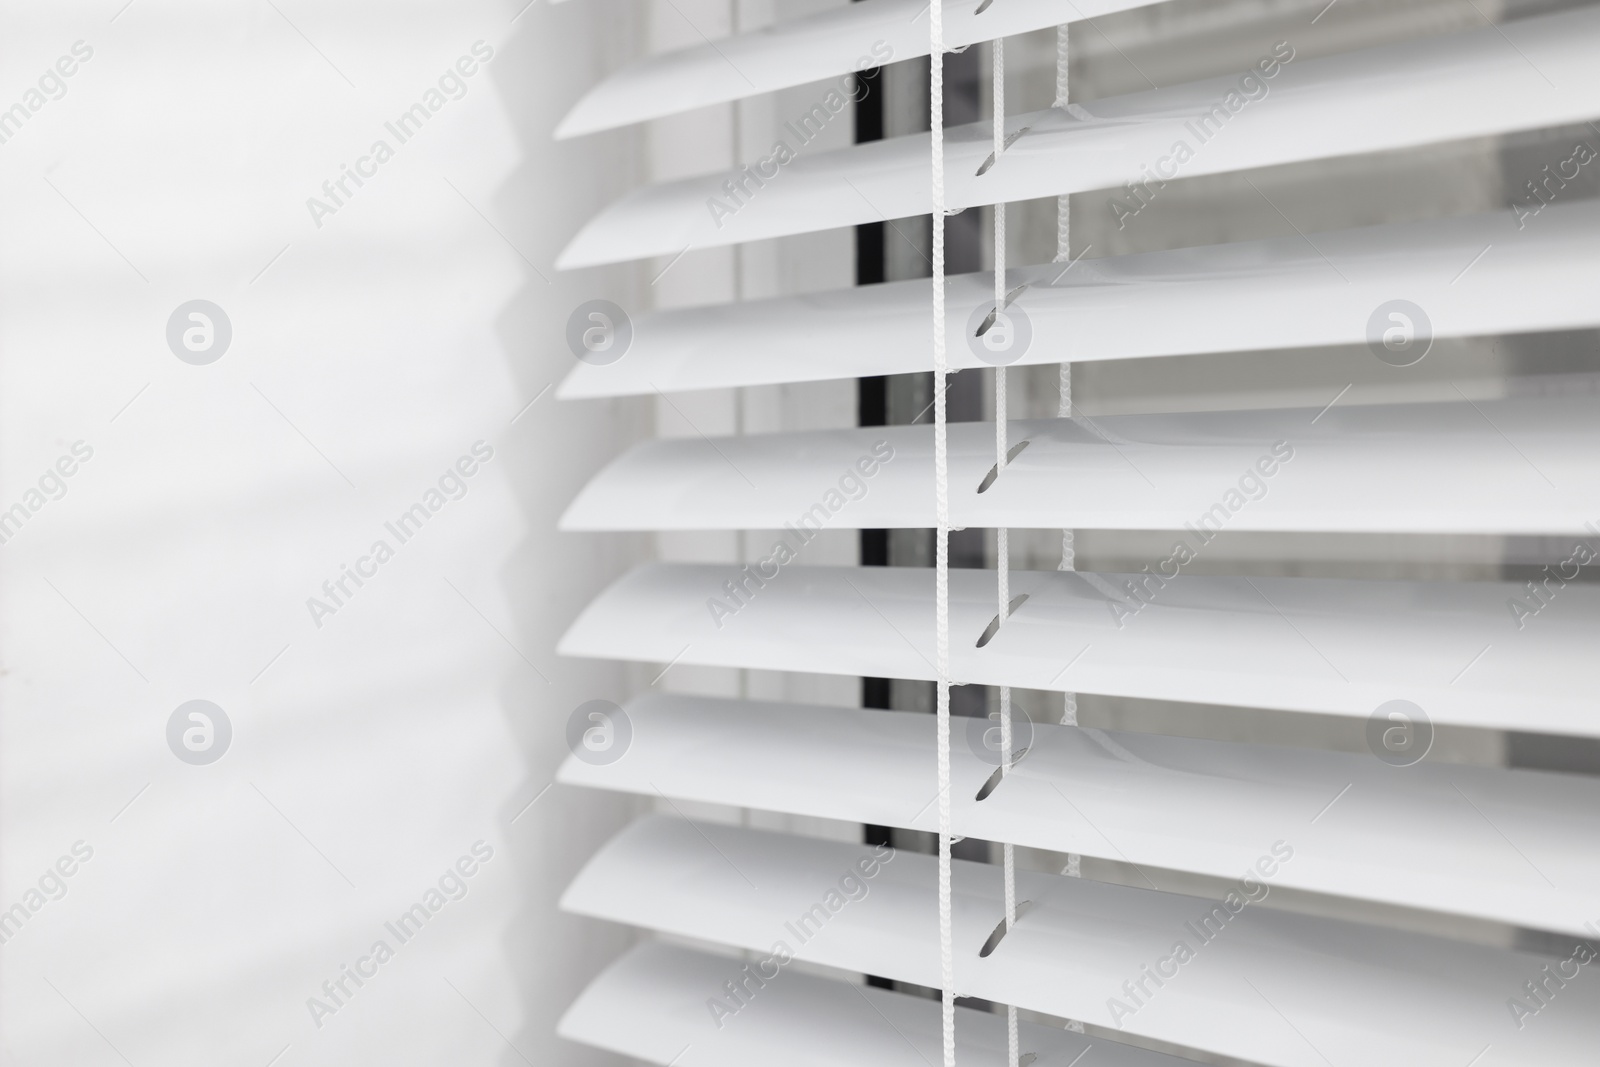 Photo of Stylish window with horizontal blinds, closeup view